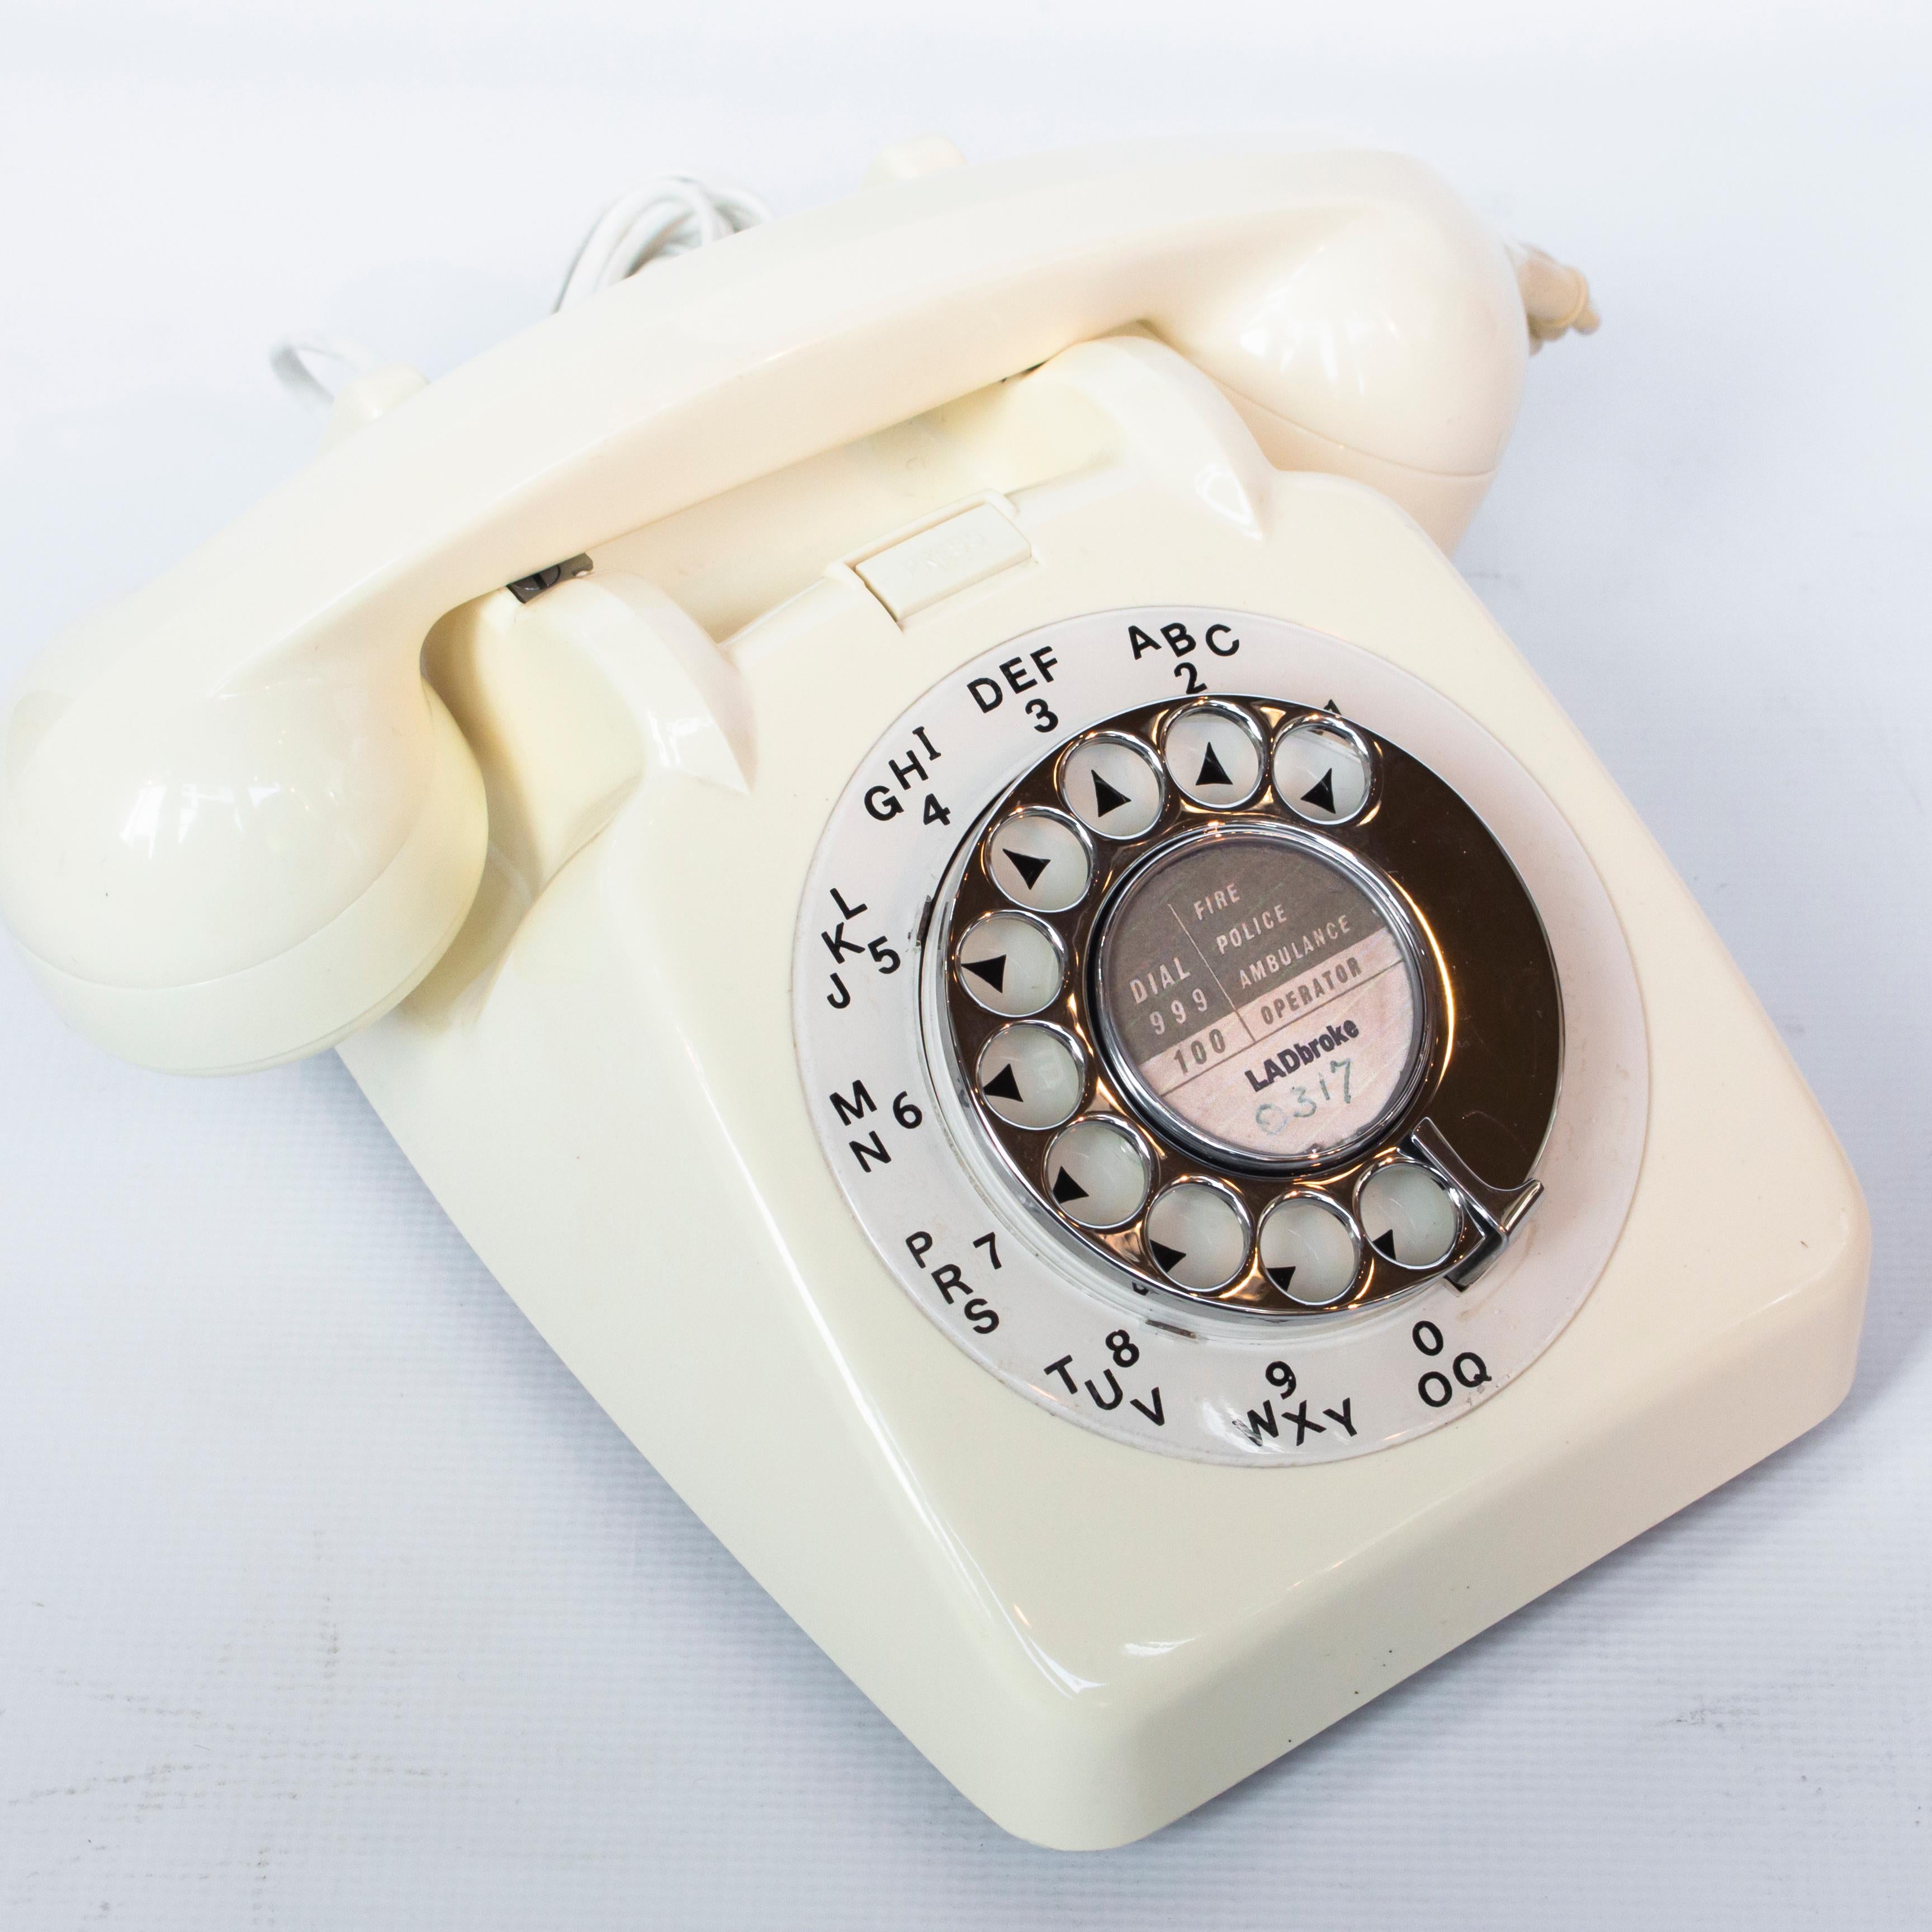 1963 phone